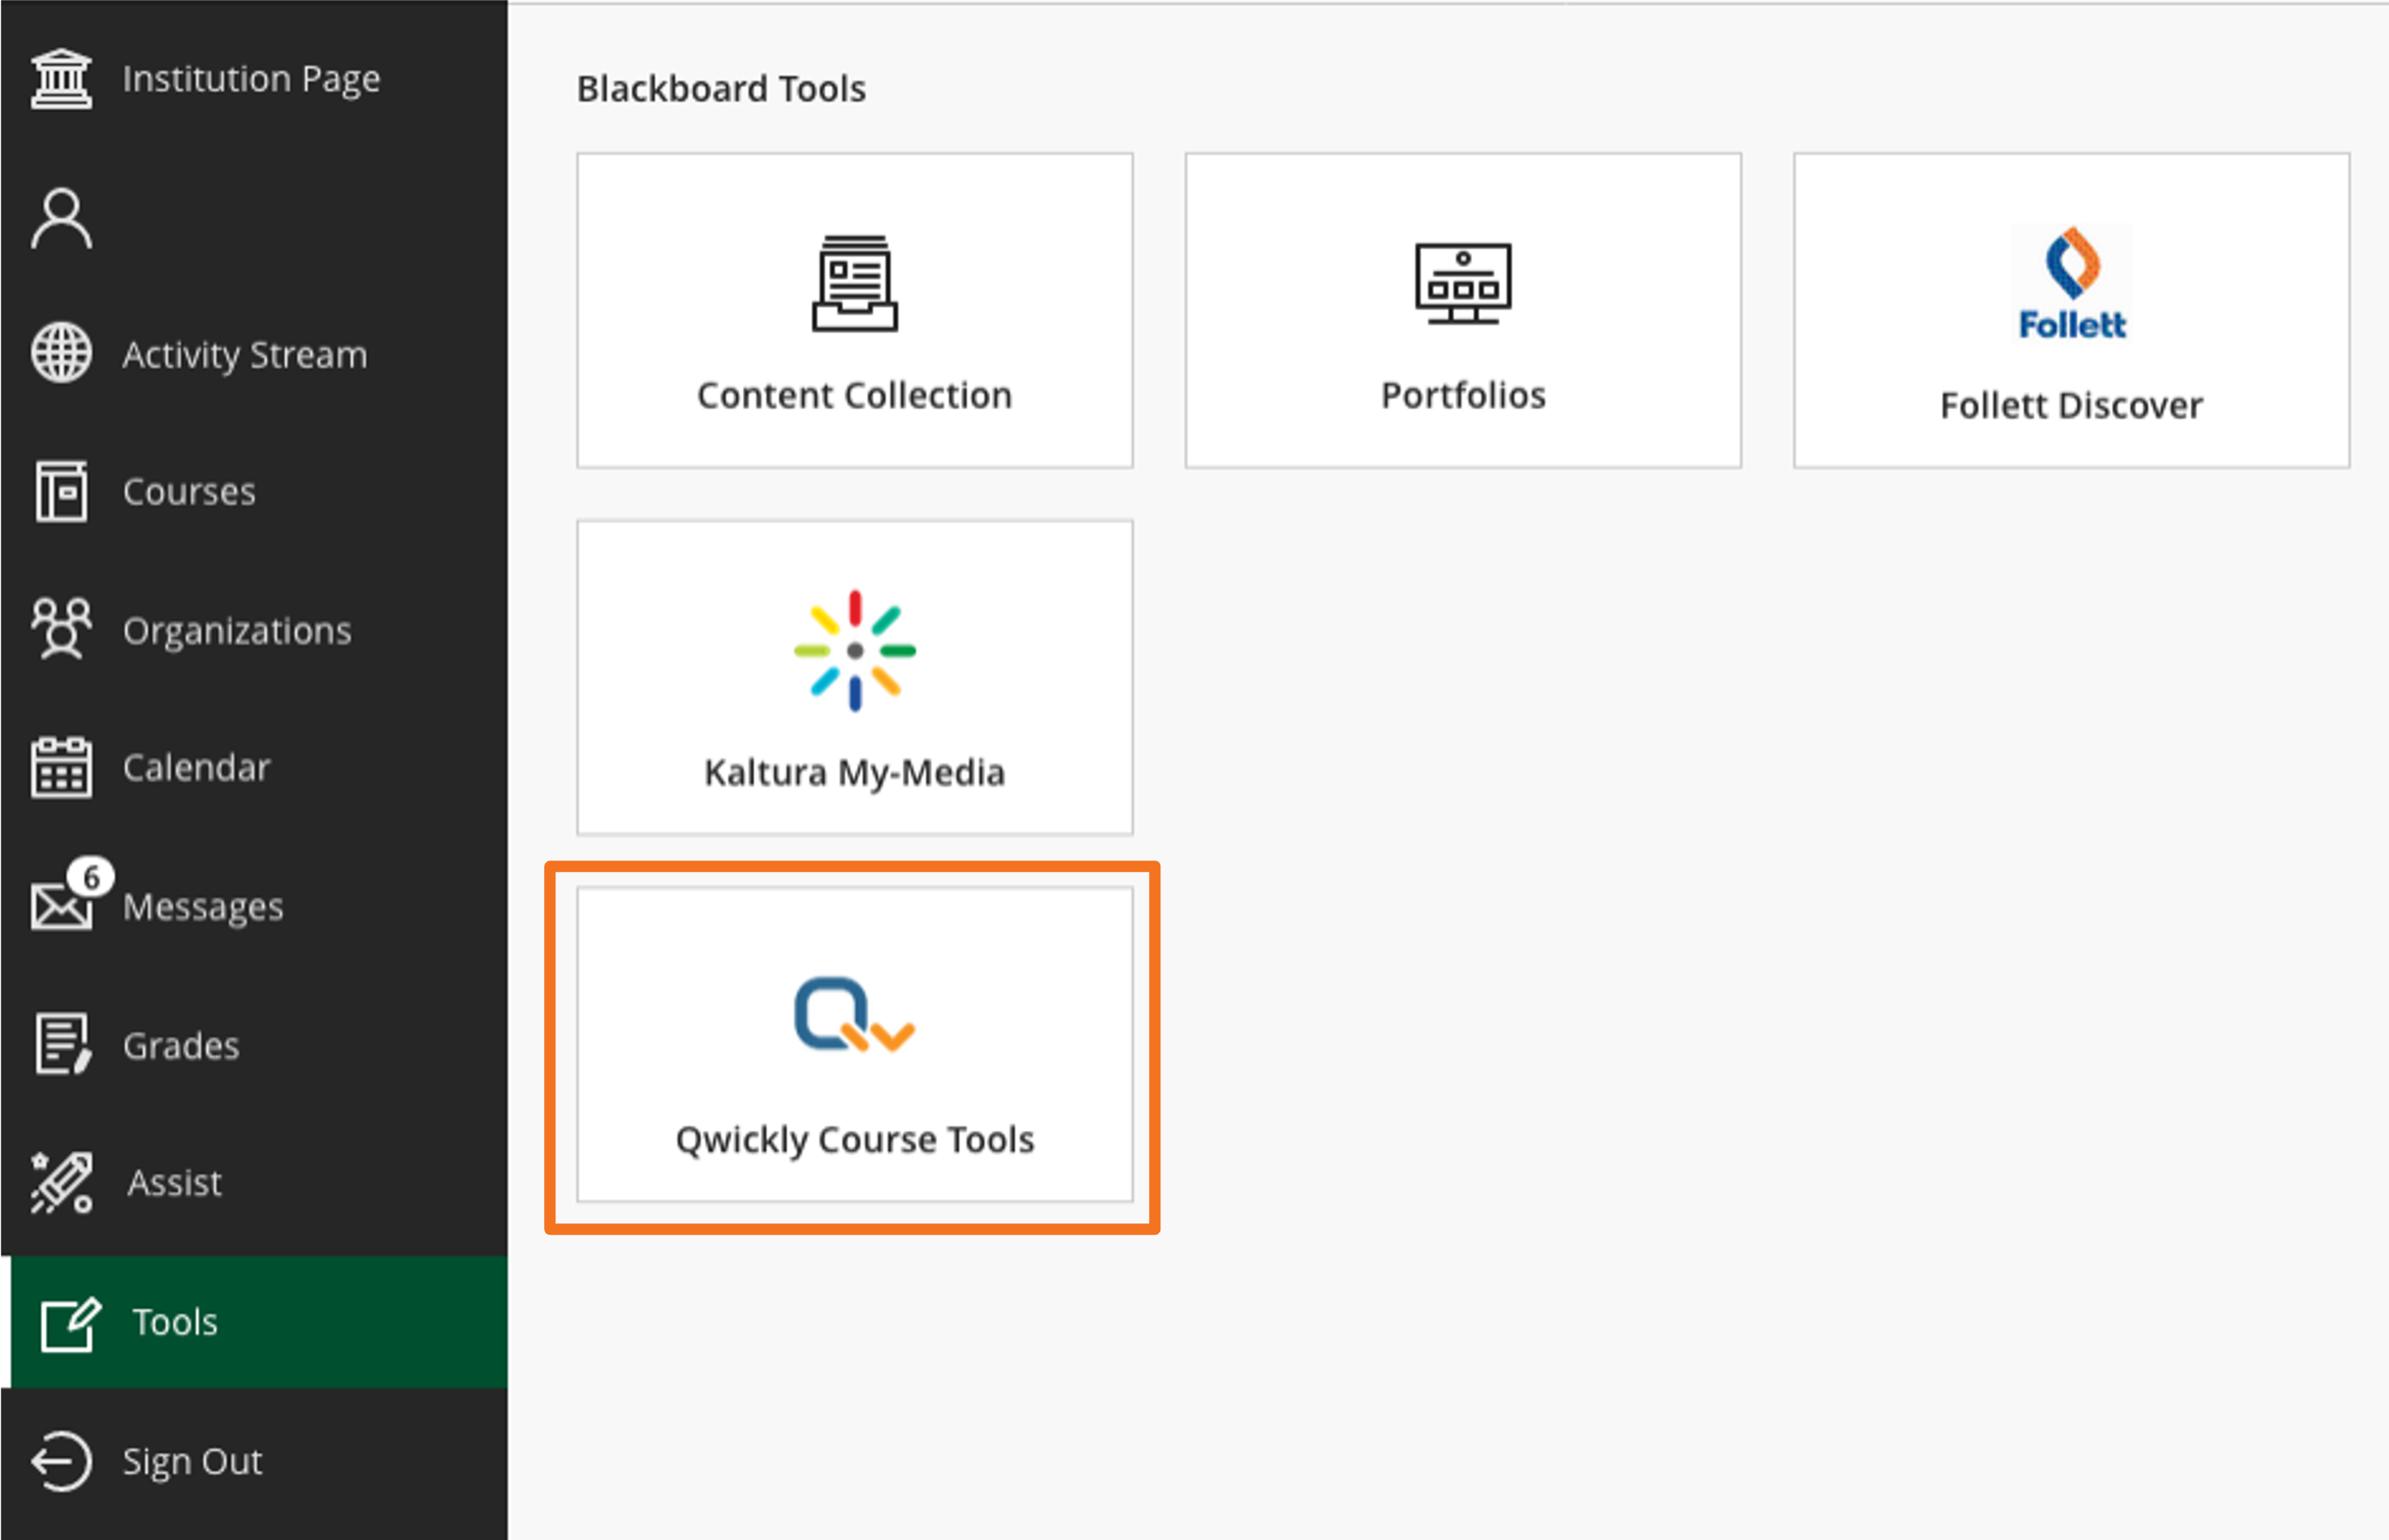 tools menu item and qwickly course tools logo